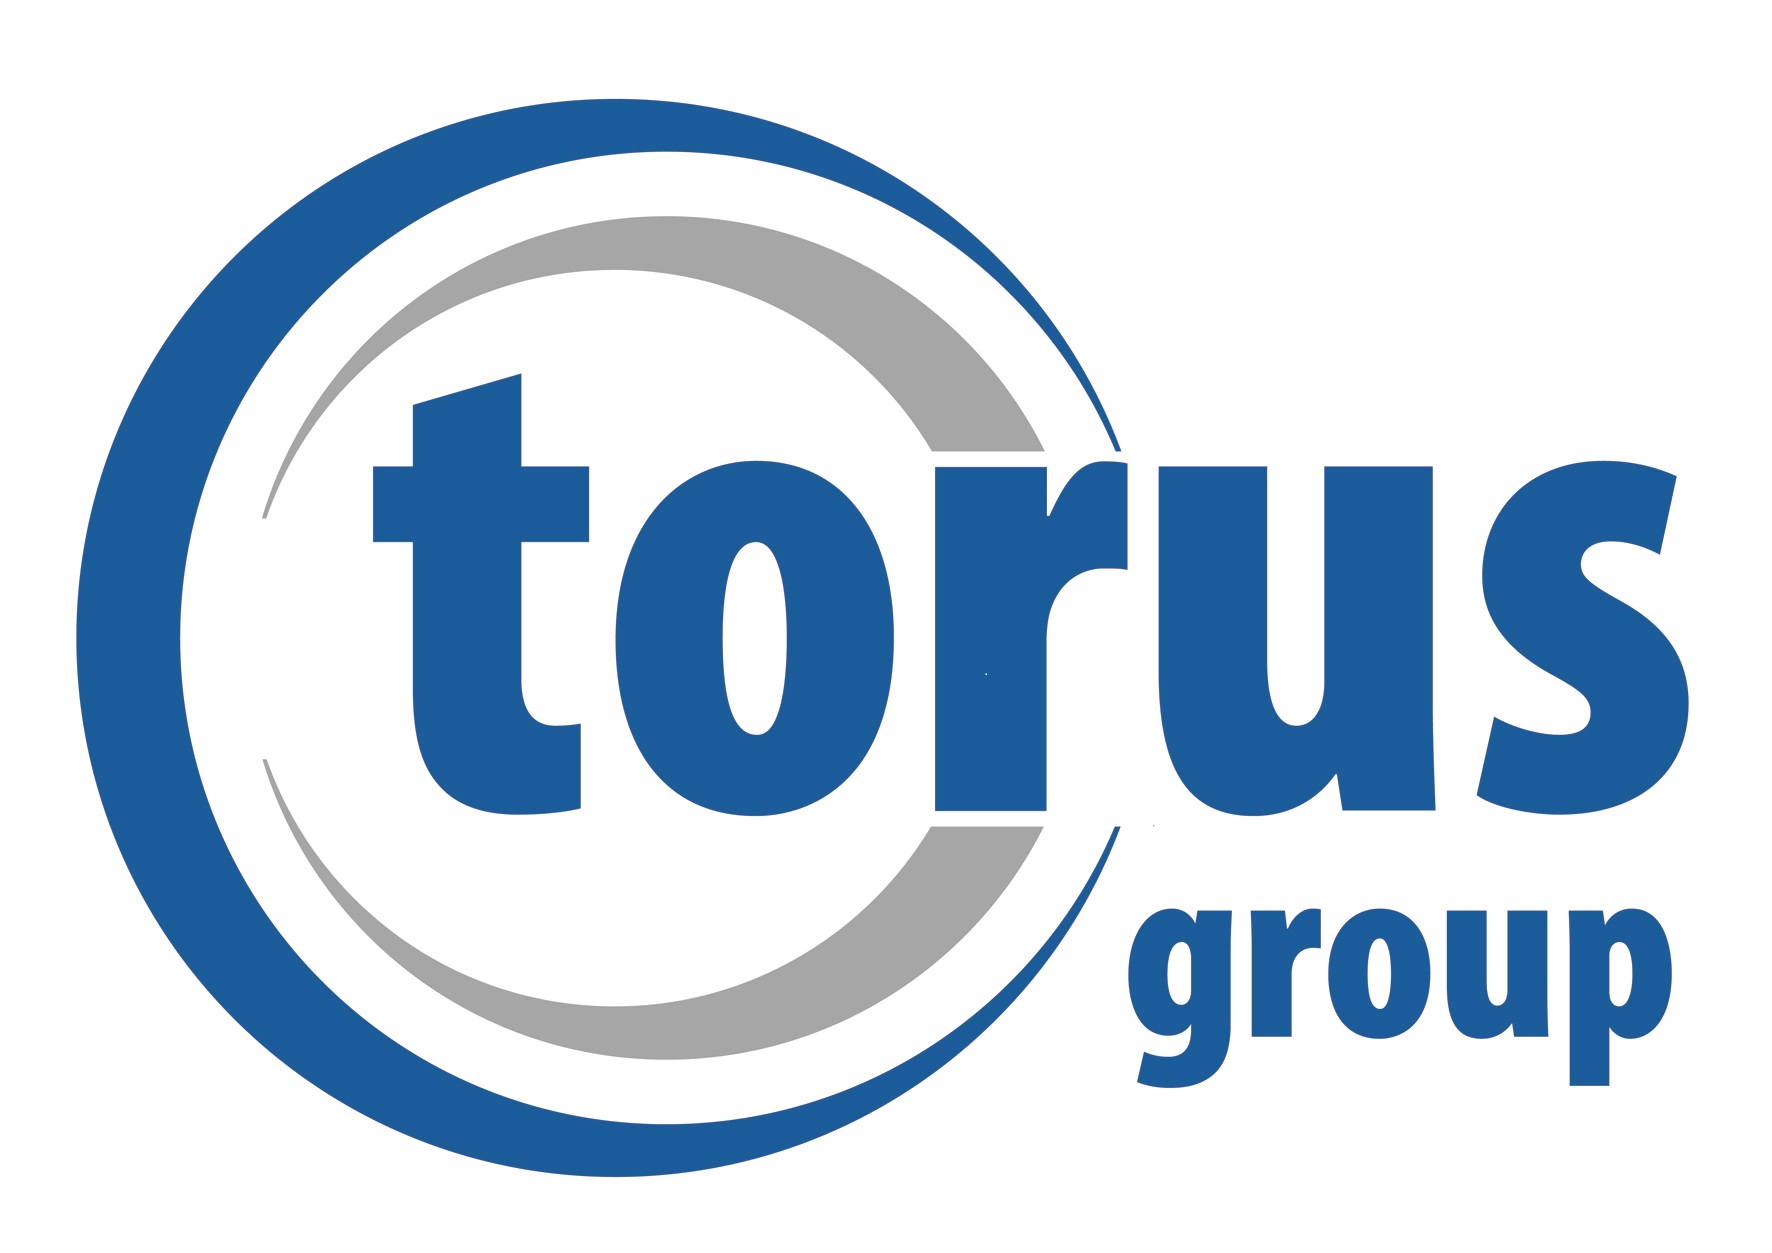 Torus Automation Limited